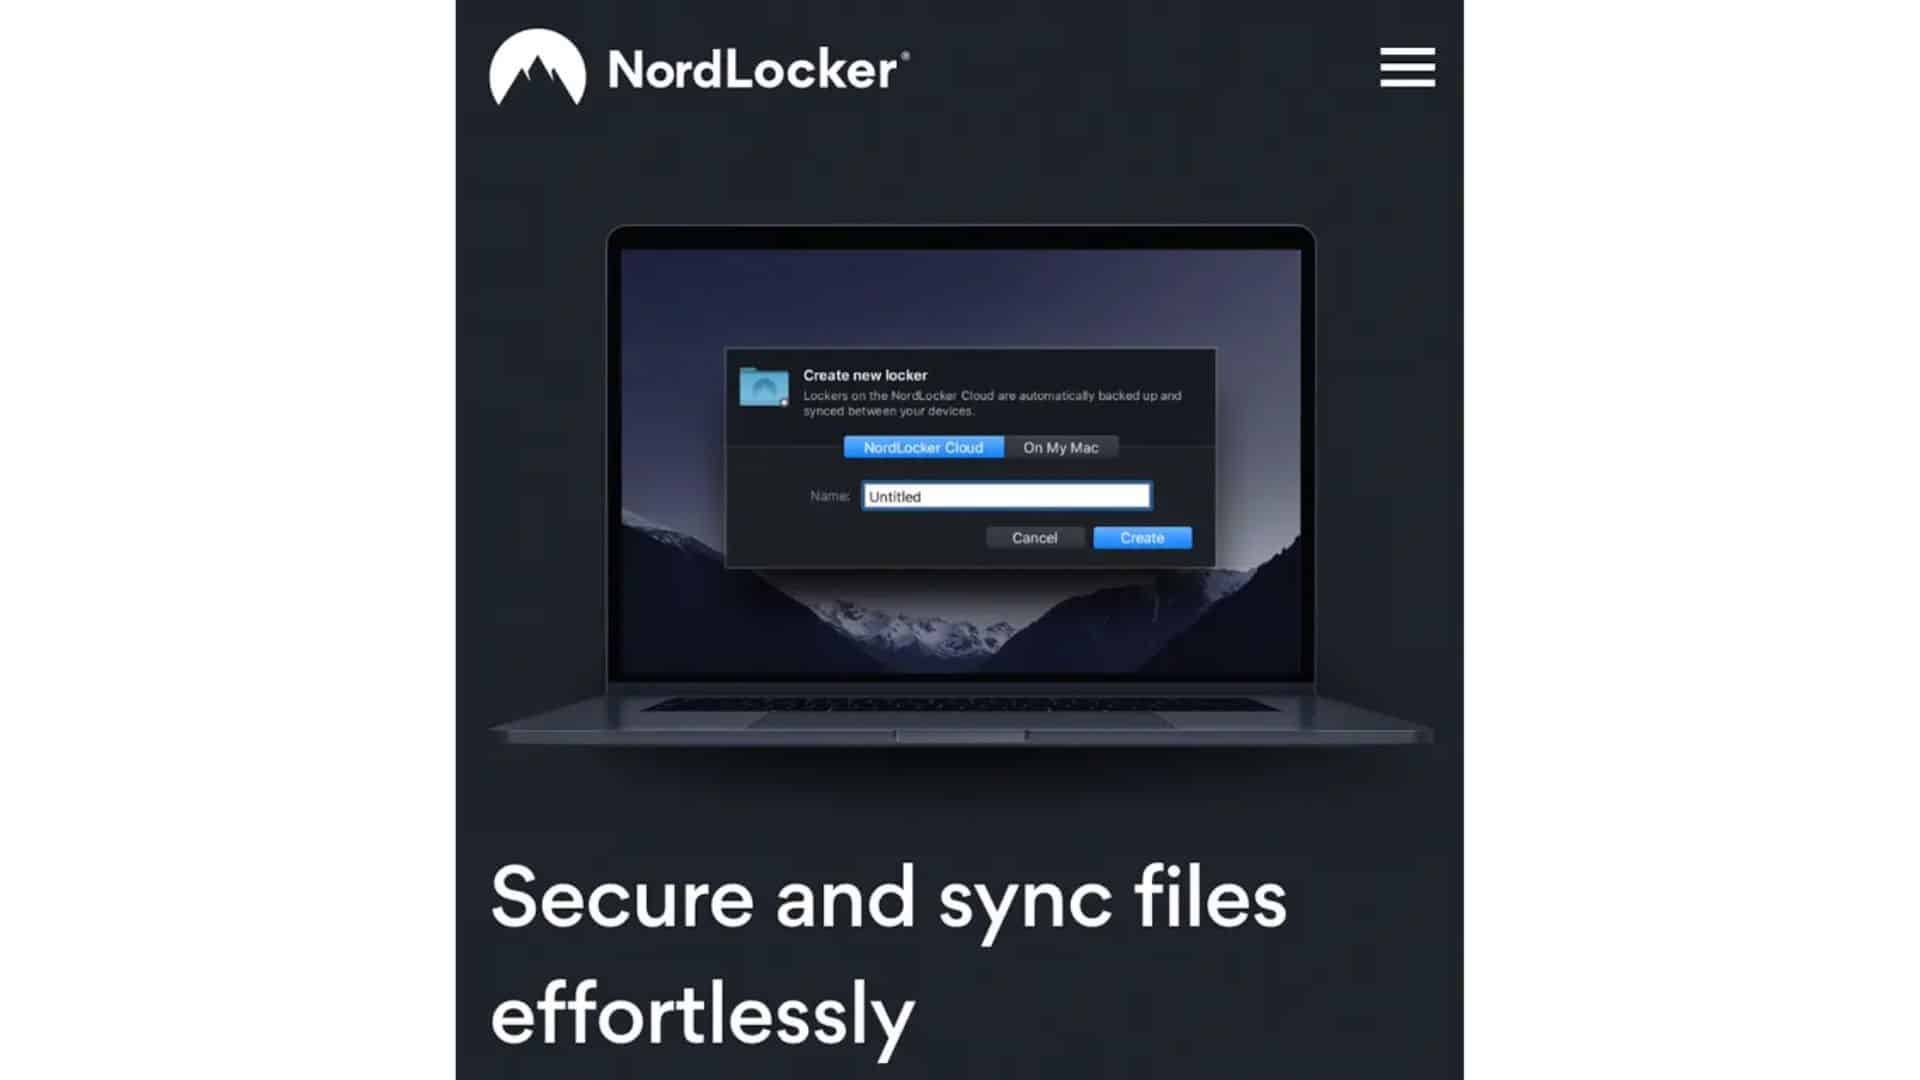 NordLocker Data Protection [Video]